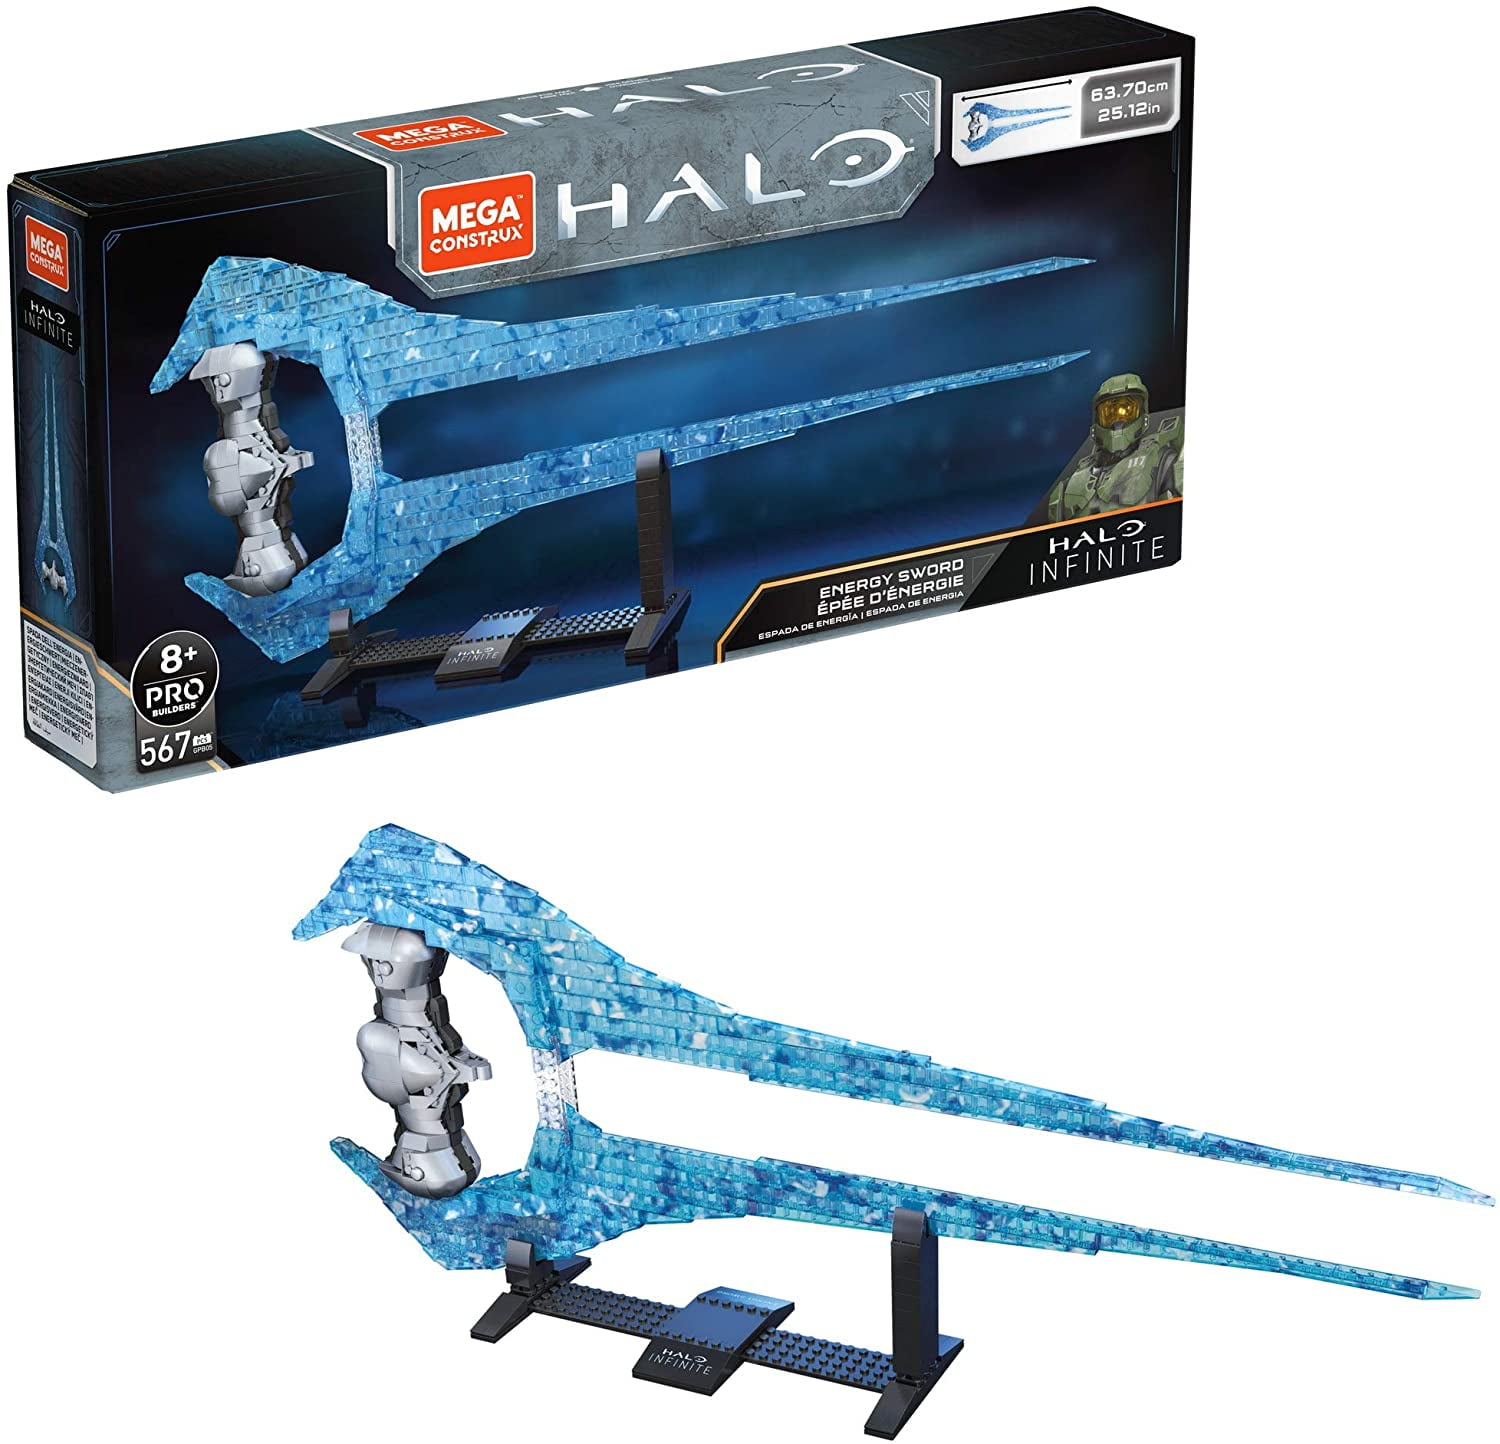 MEGA Construx Halo Infinite Energy Sword Construction Set GPB05 for sale online 